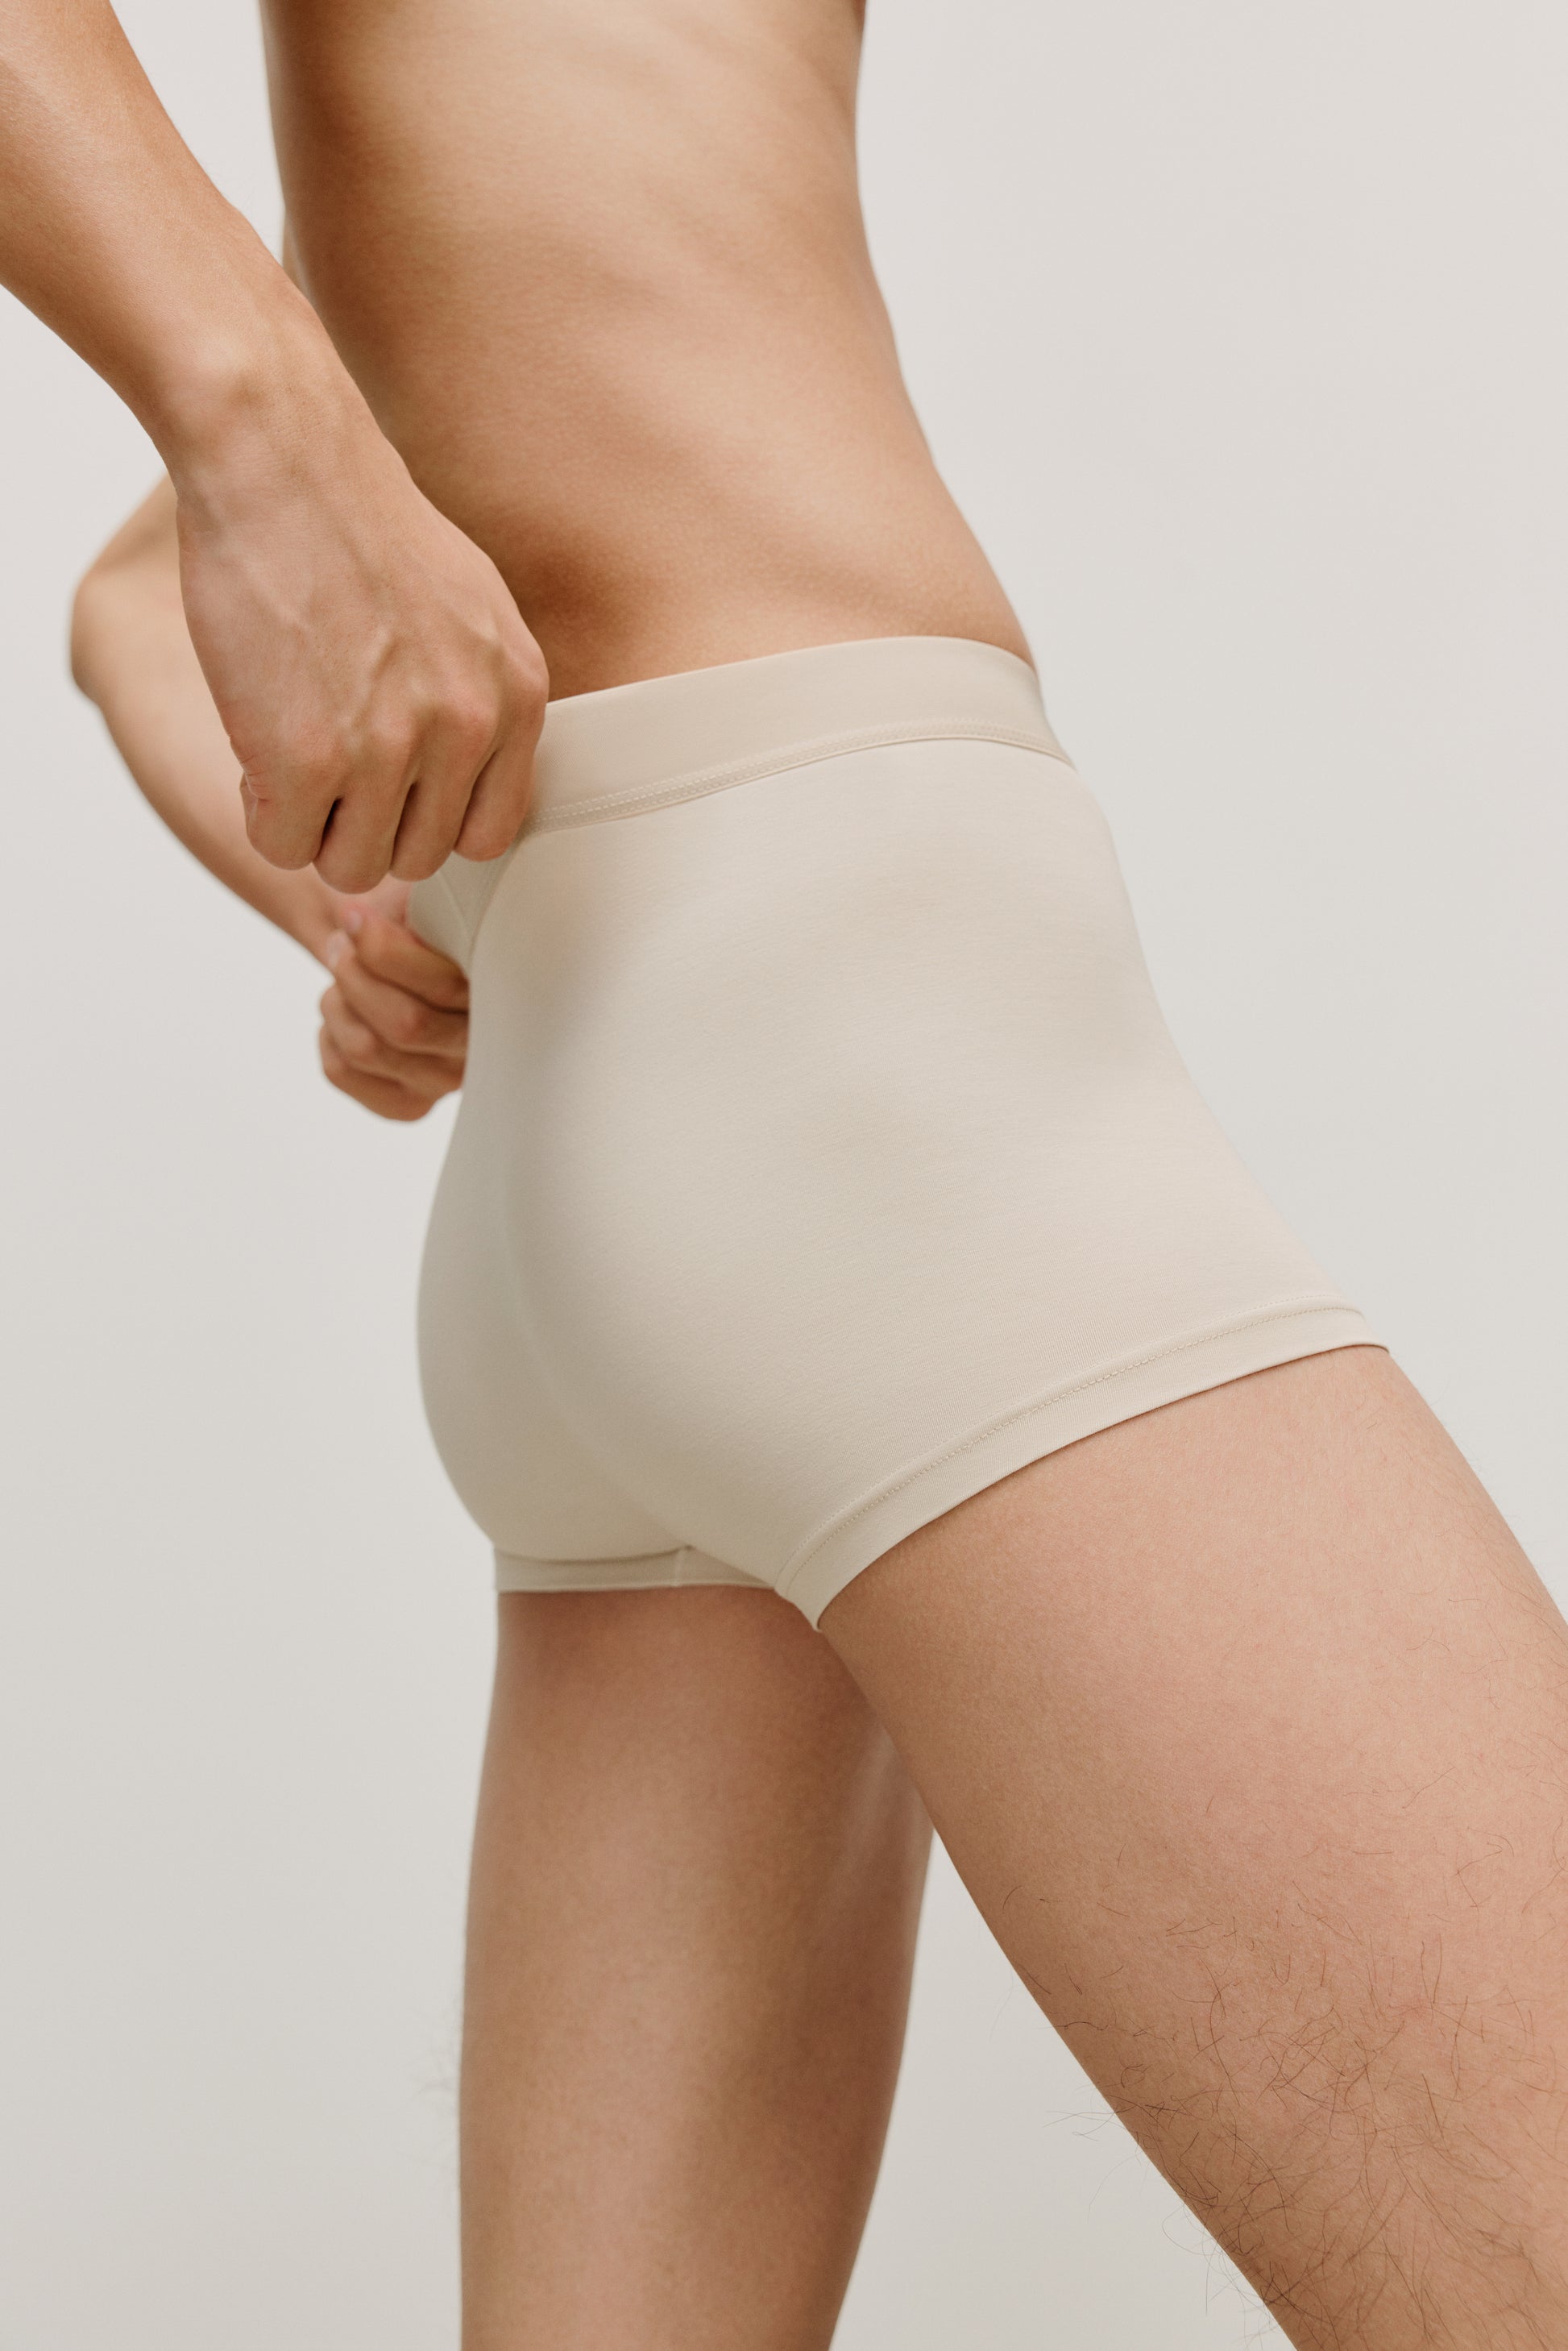 WANYNG mens underwear Men's Cotton Briefs And Comfortable Slim